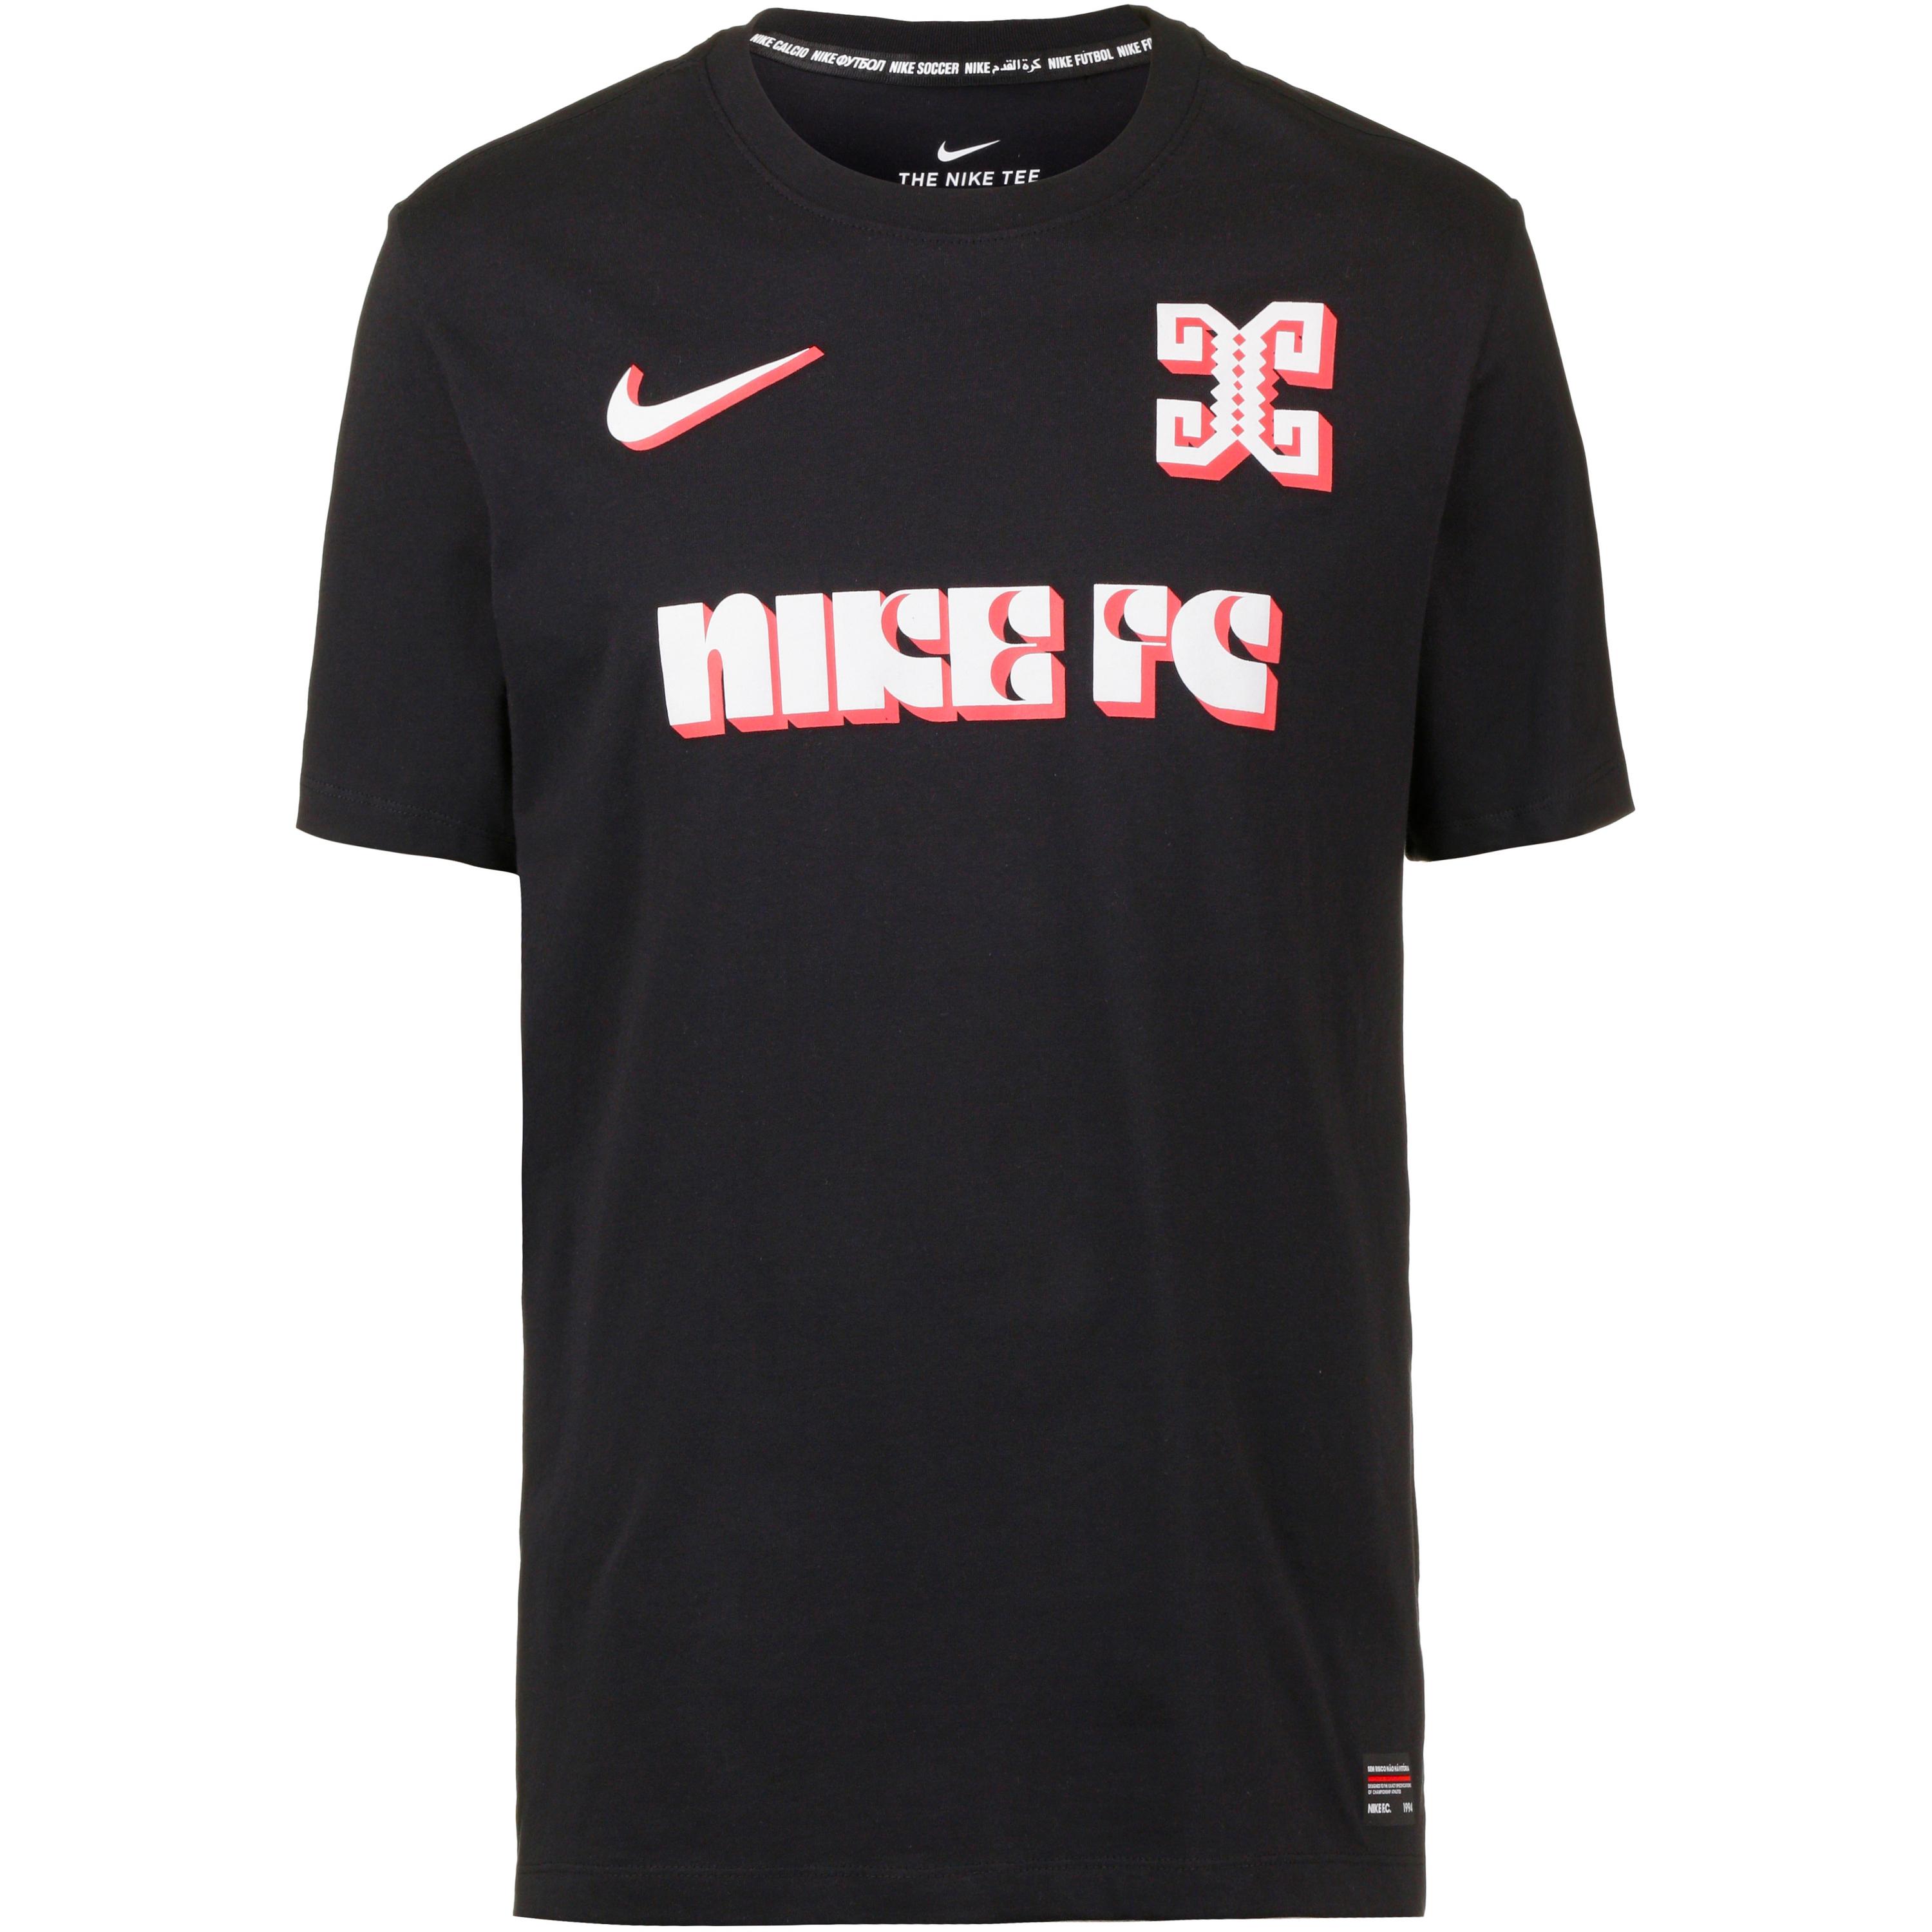 Nike Nike FC T-Shirt Herren